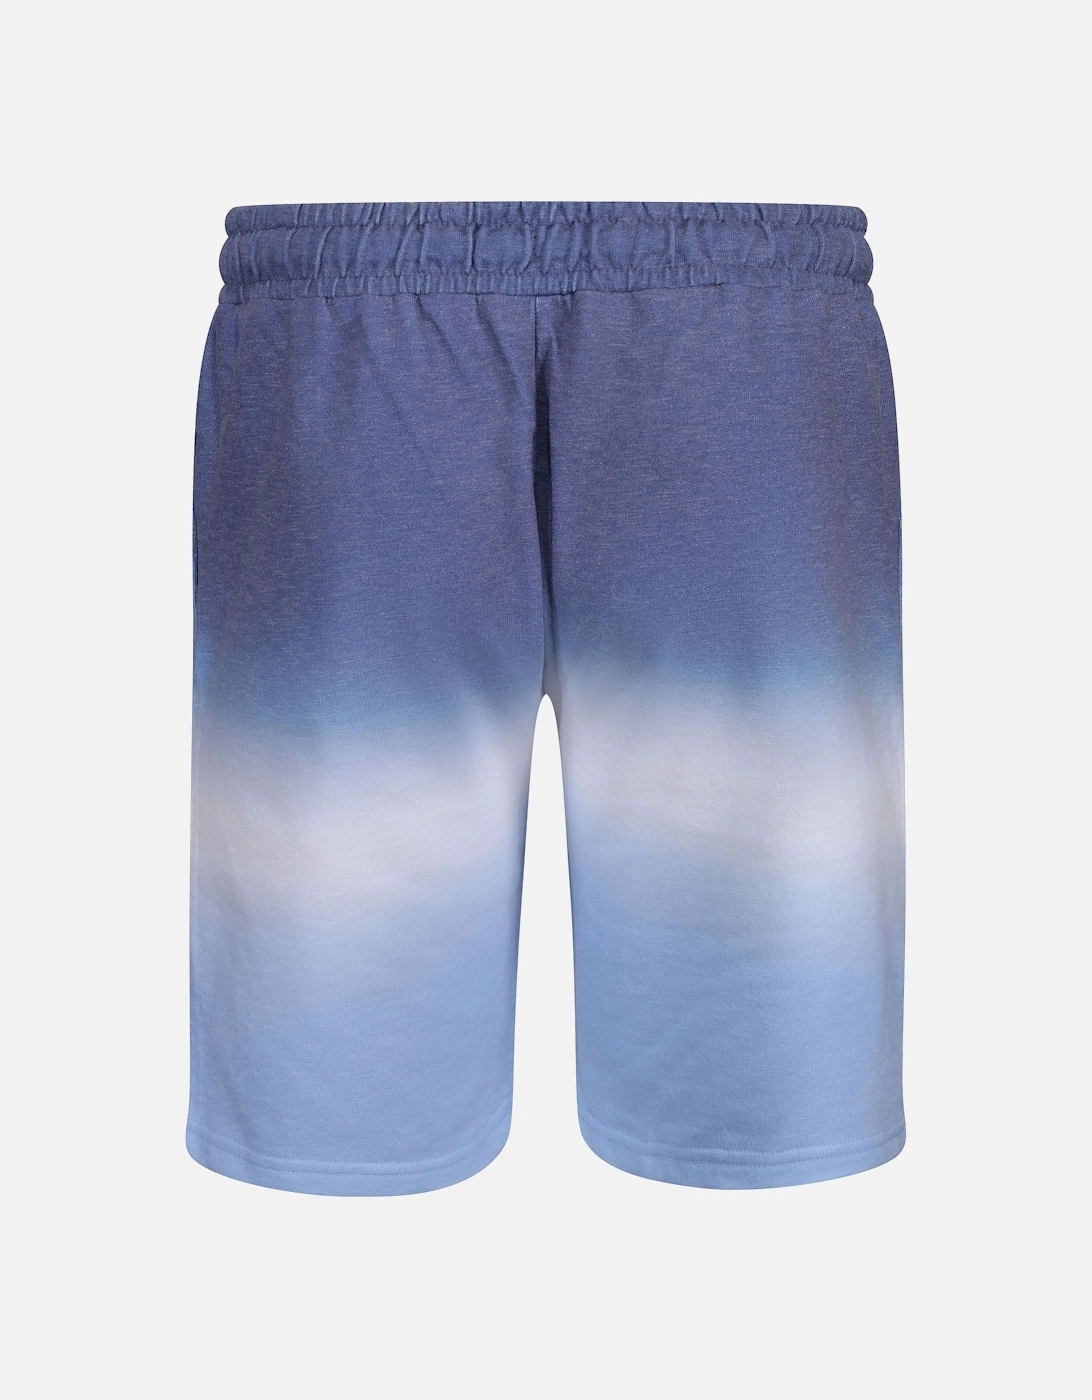 Nolish Fleece Men's Sweat Shorts | Multi